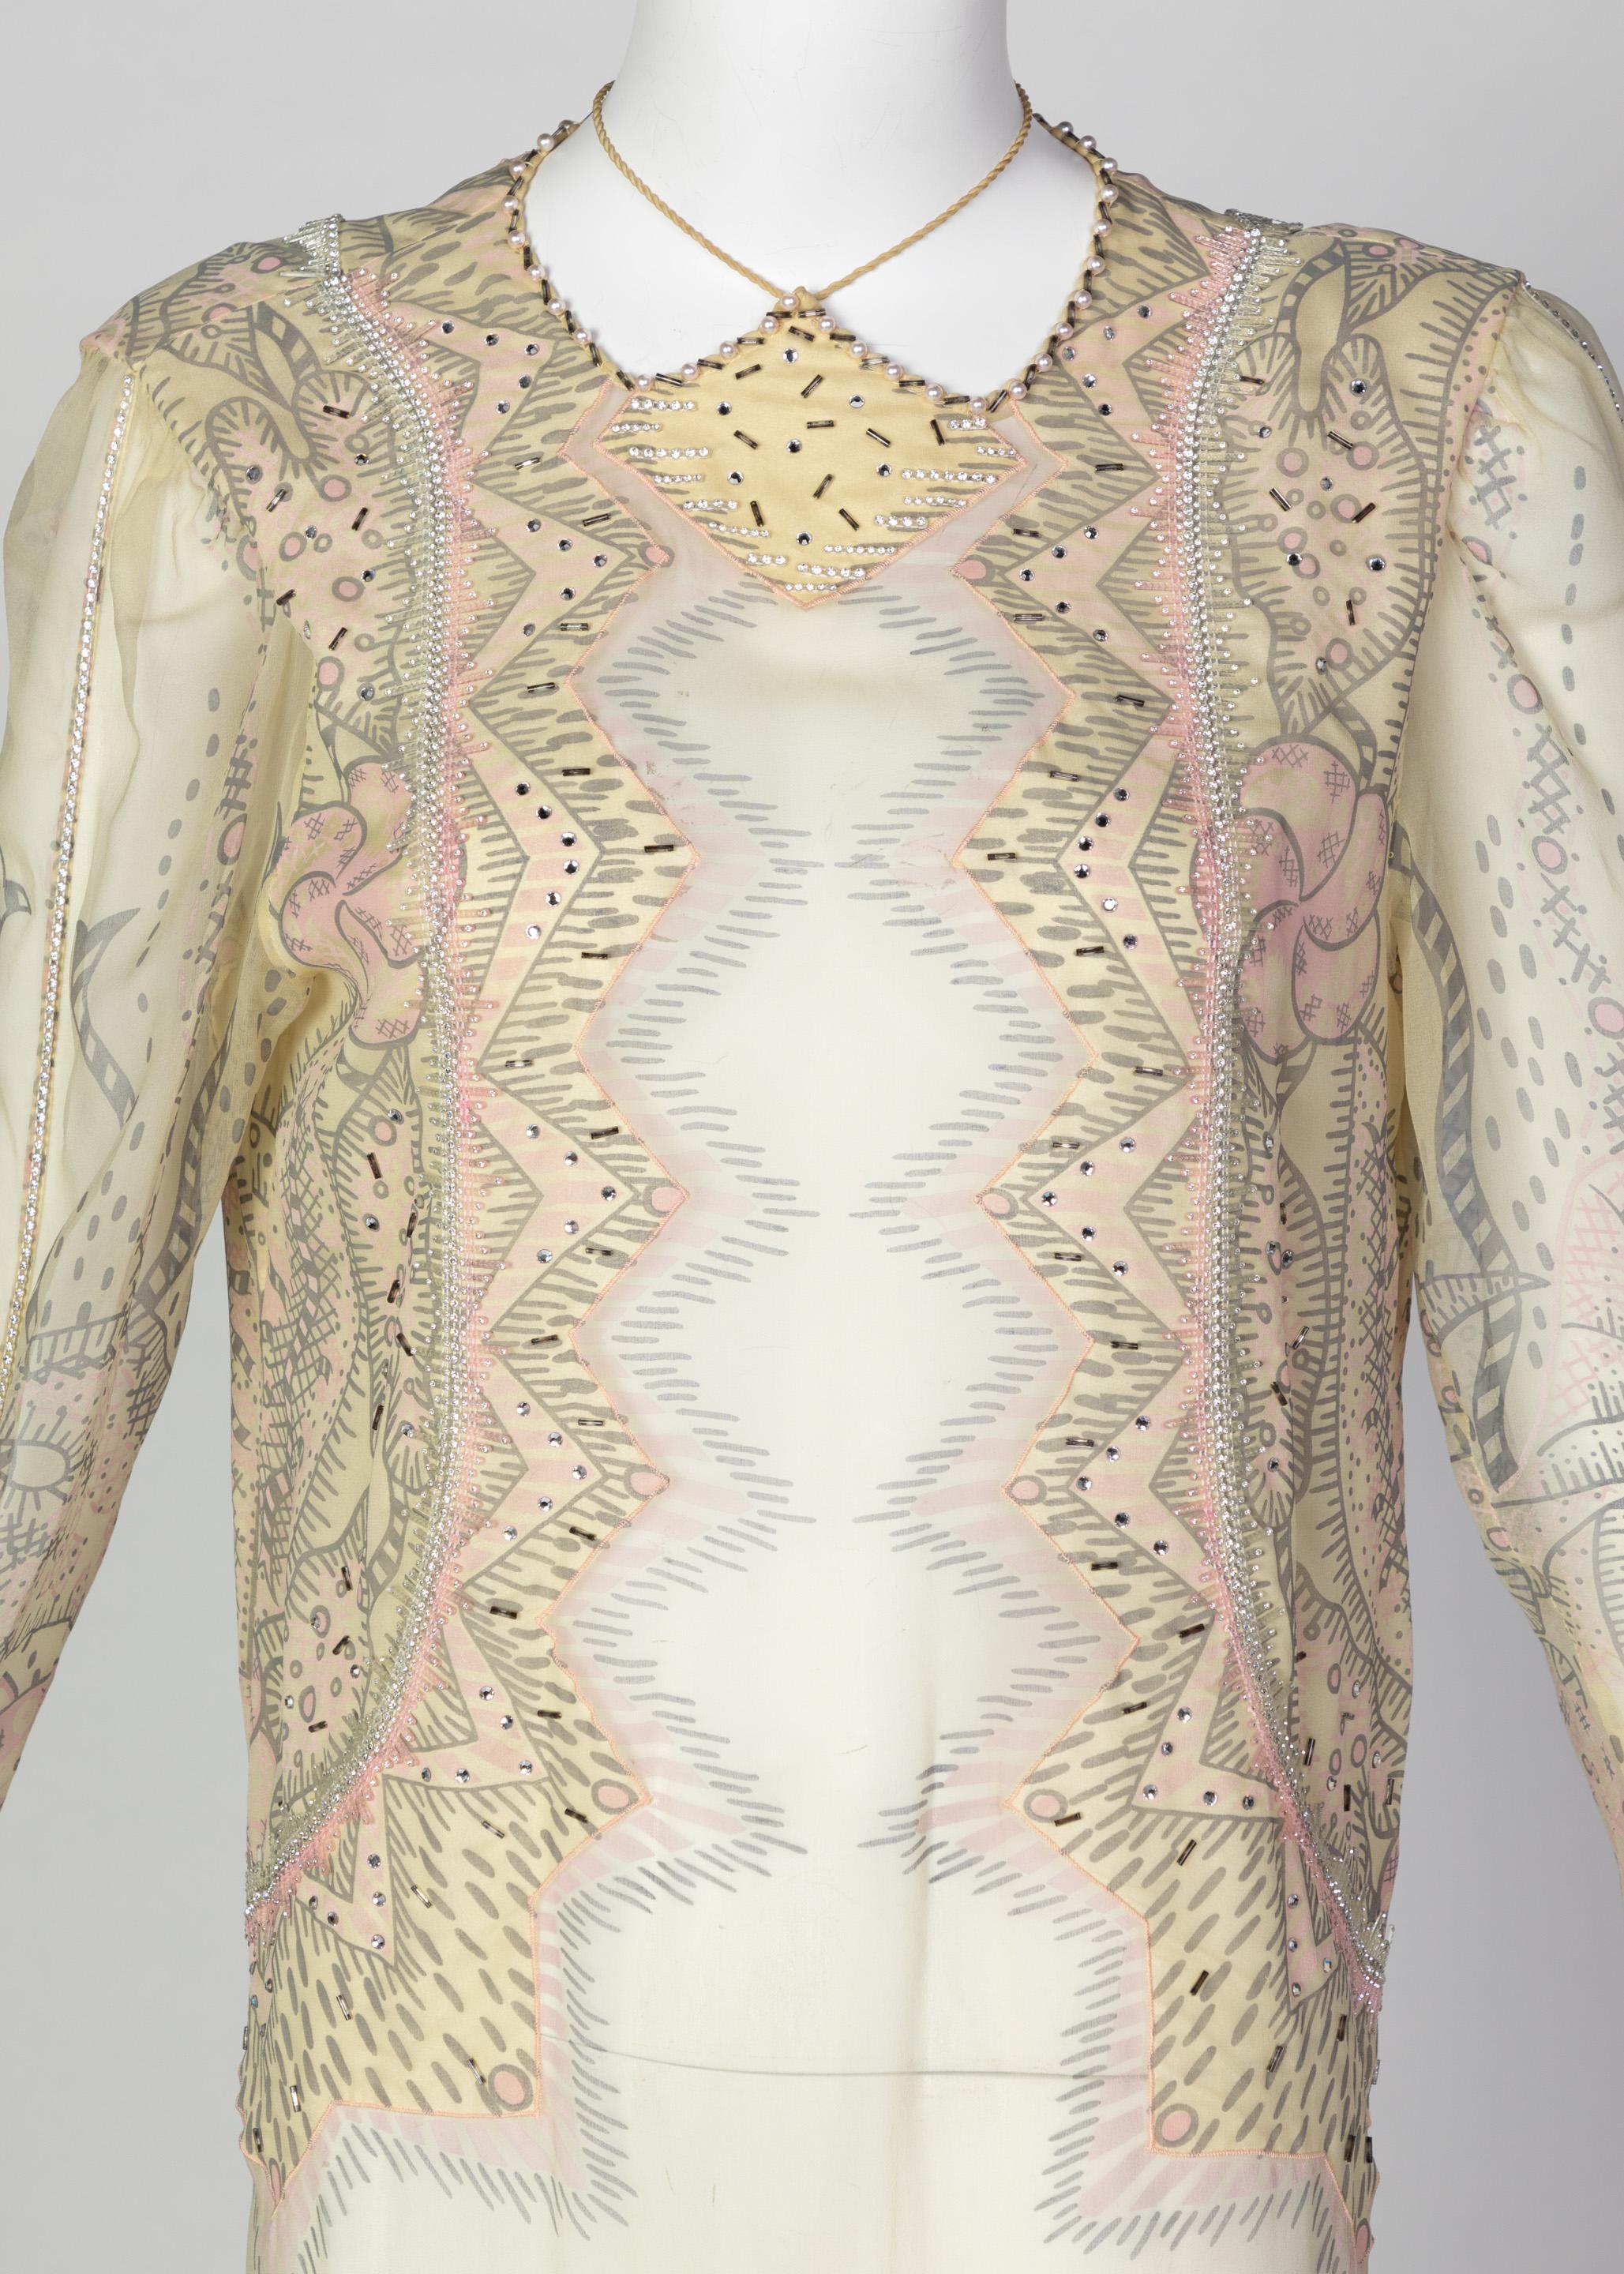 Zandra Rhodes Unlabelled Hand Painted Sheer Silk Pearl Edged Dress, 1980s 1